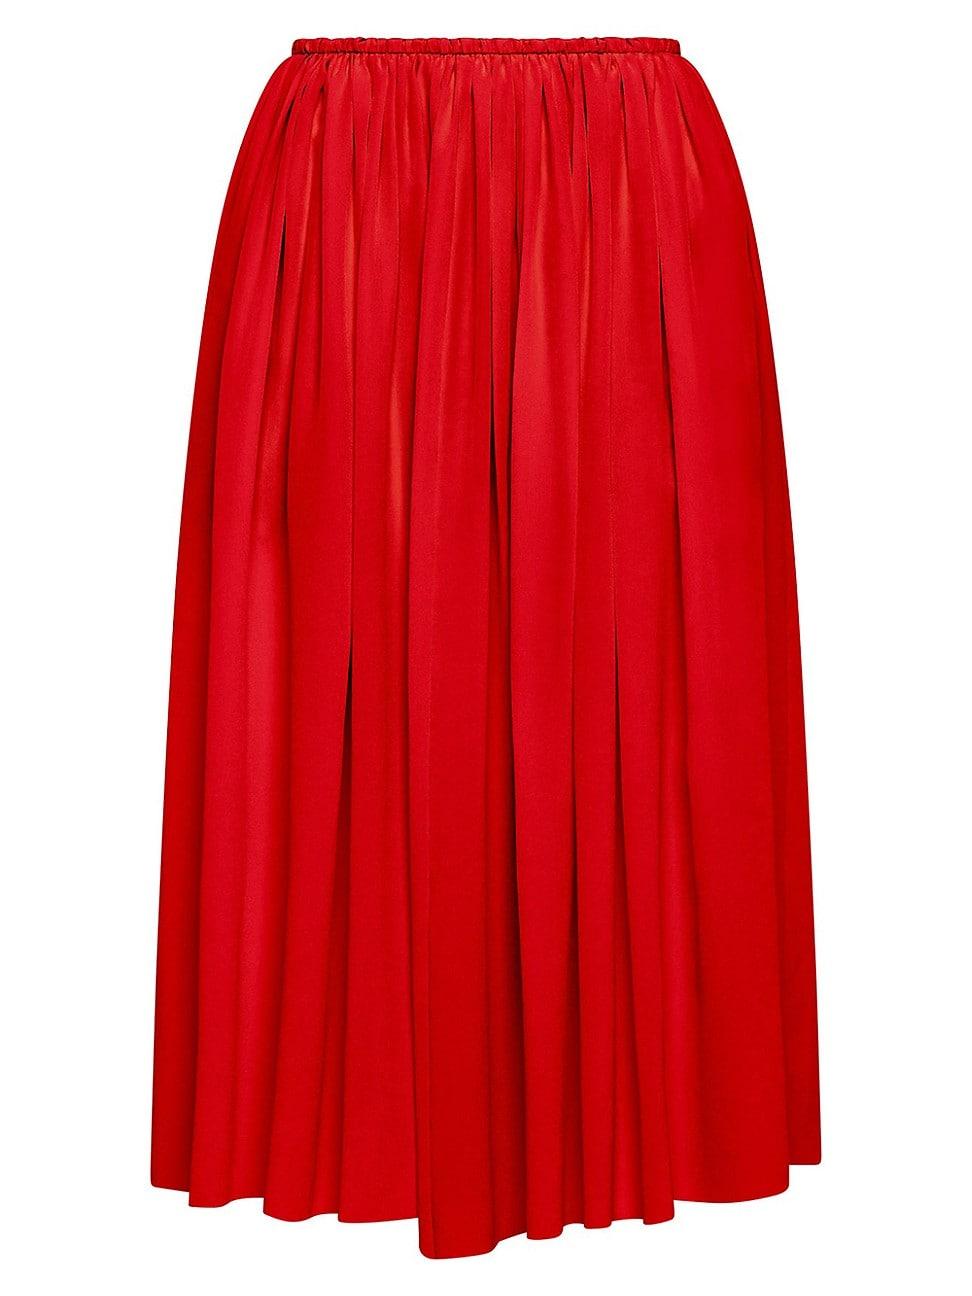 Careste Daila Silk Skirt in Red | Lyst